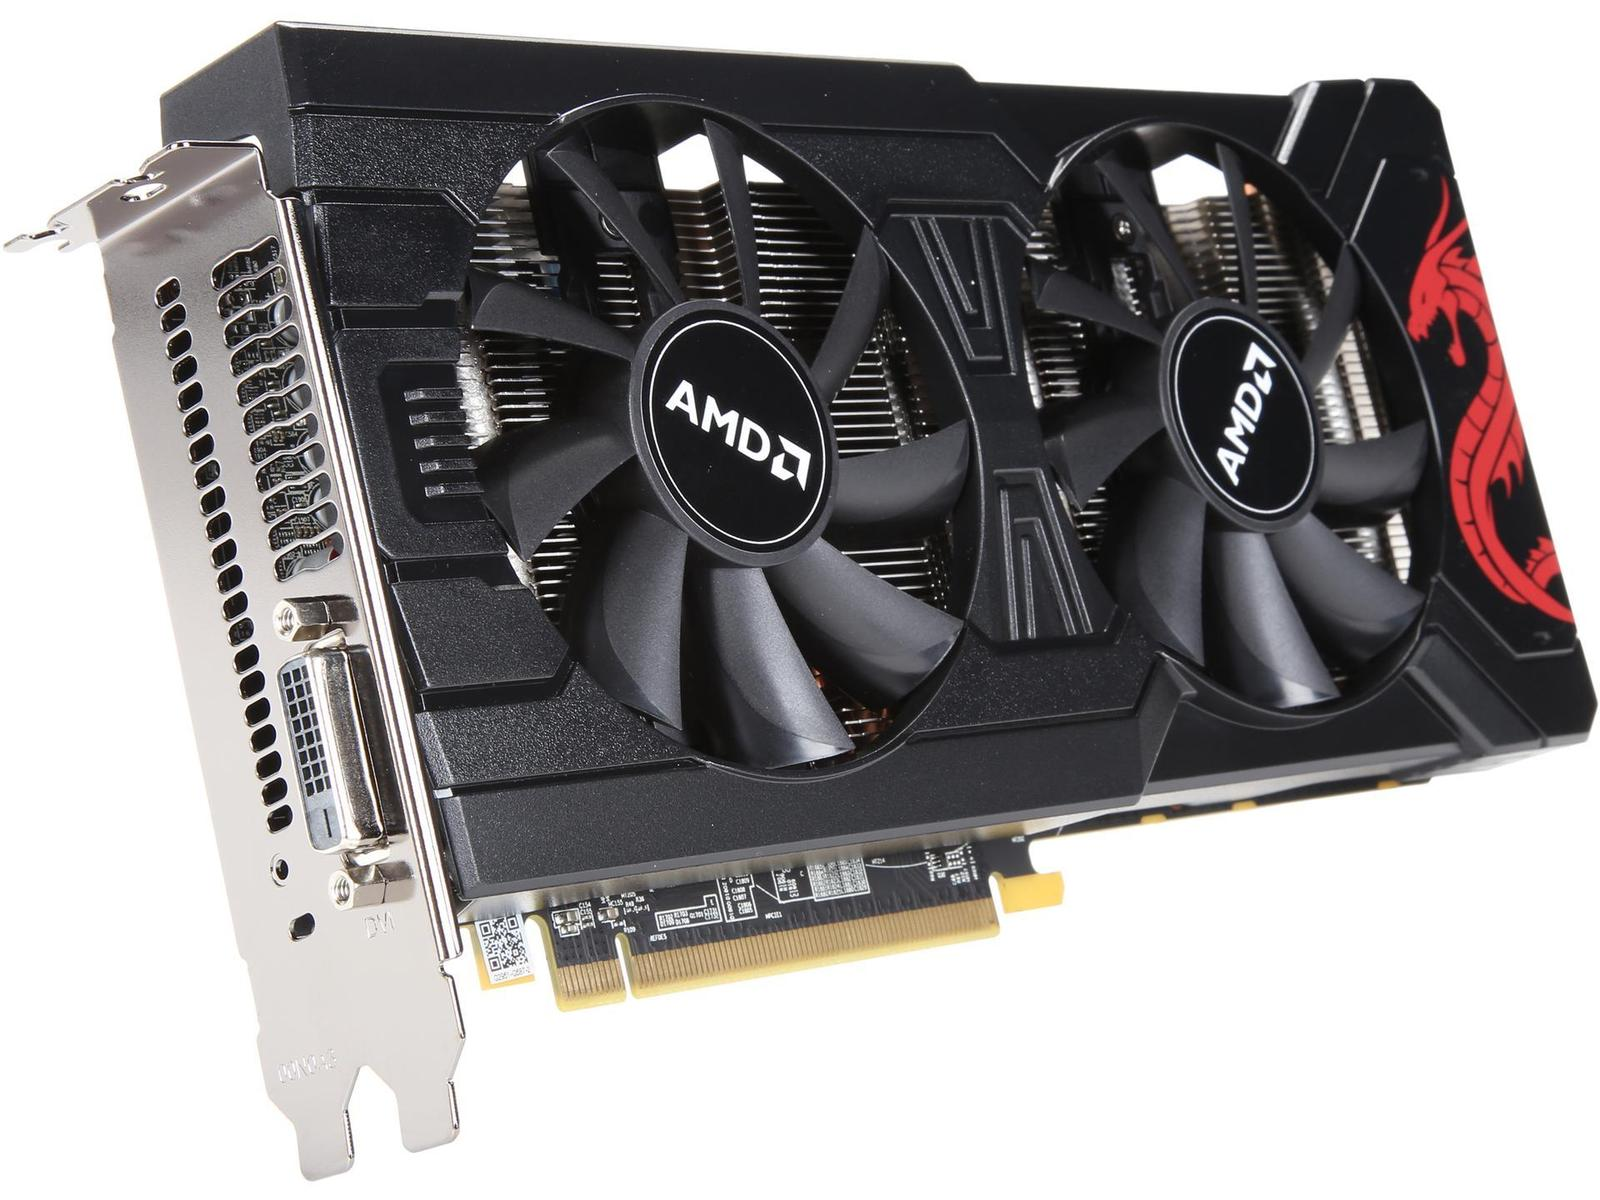 Amd 570 series. AMD Radeon RX 570 8gb. Видеокарта RX 570 8gb. AMD RX 570 4gb. POWERCOLOR RX 570 8gb.